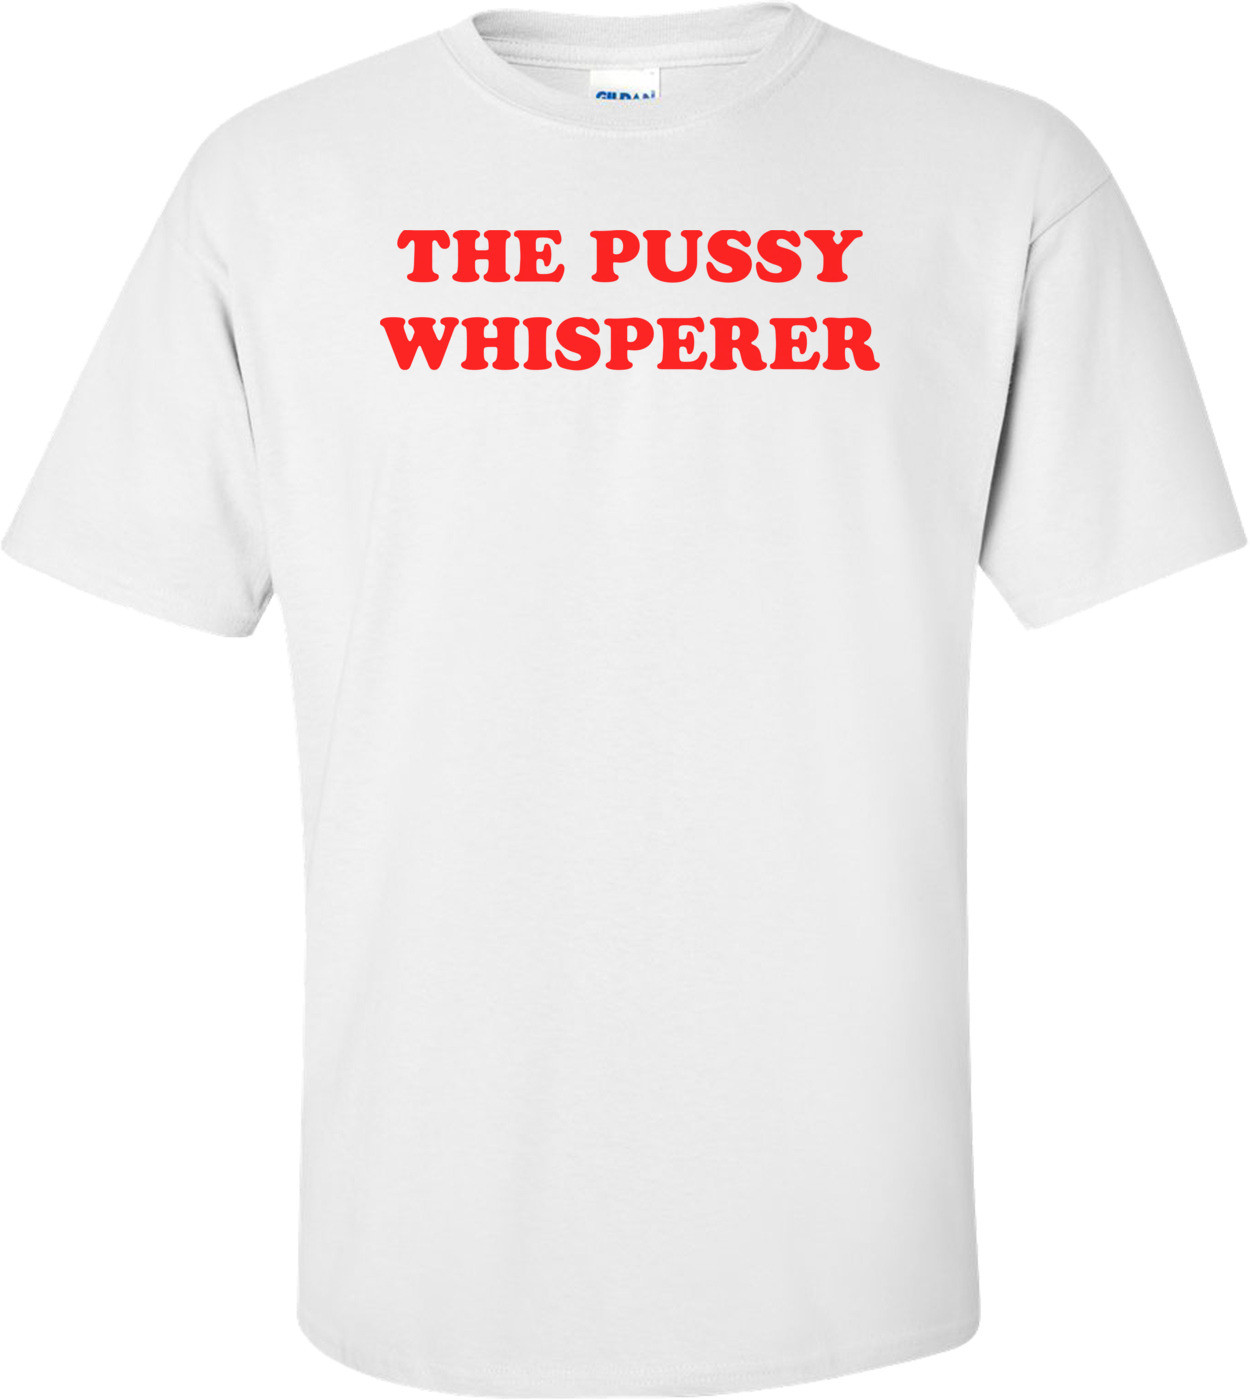 THE PUSSY WHISPERER